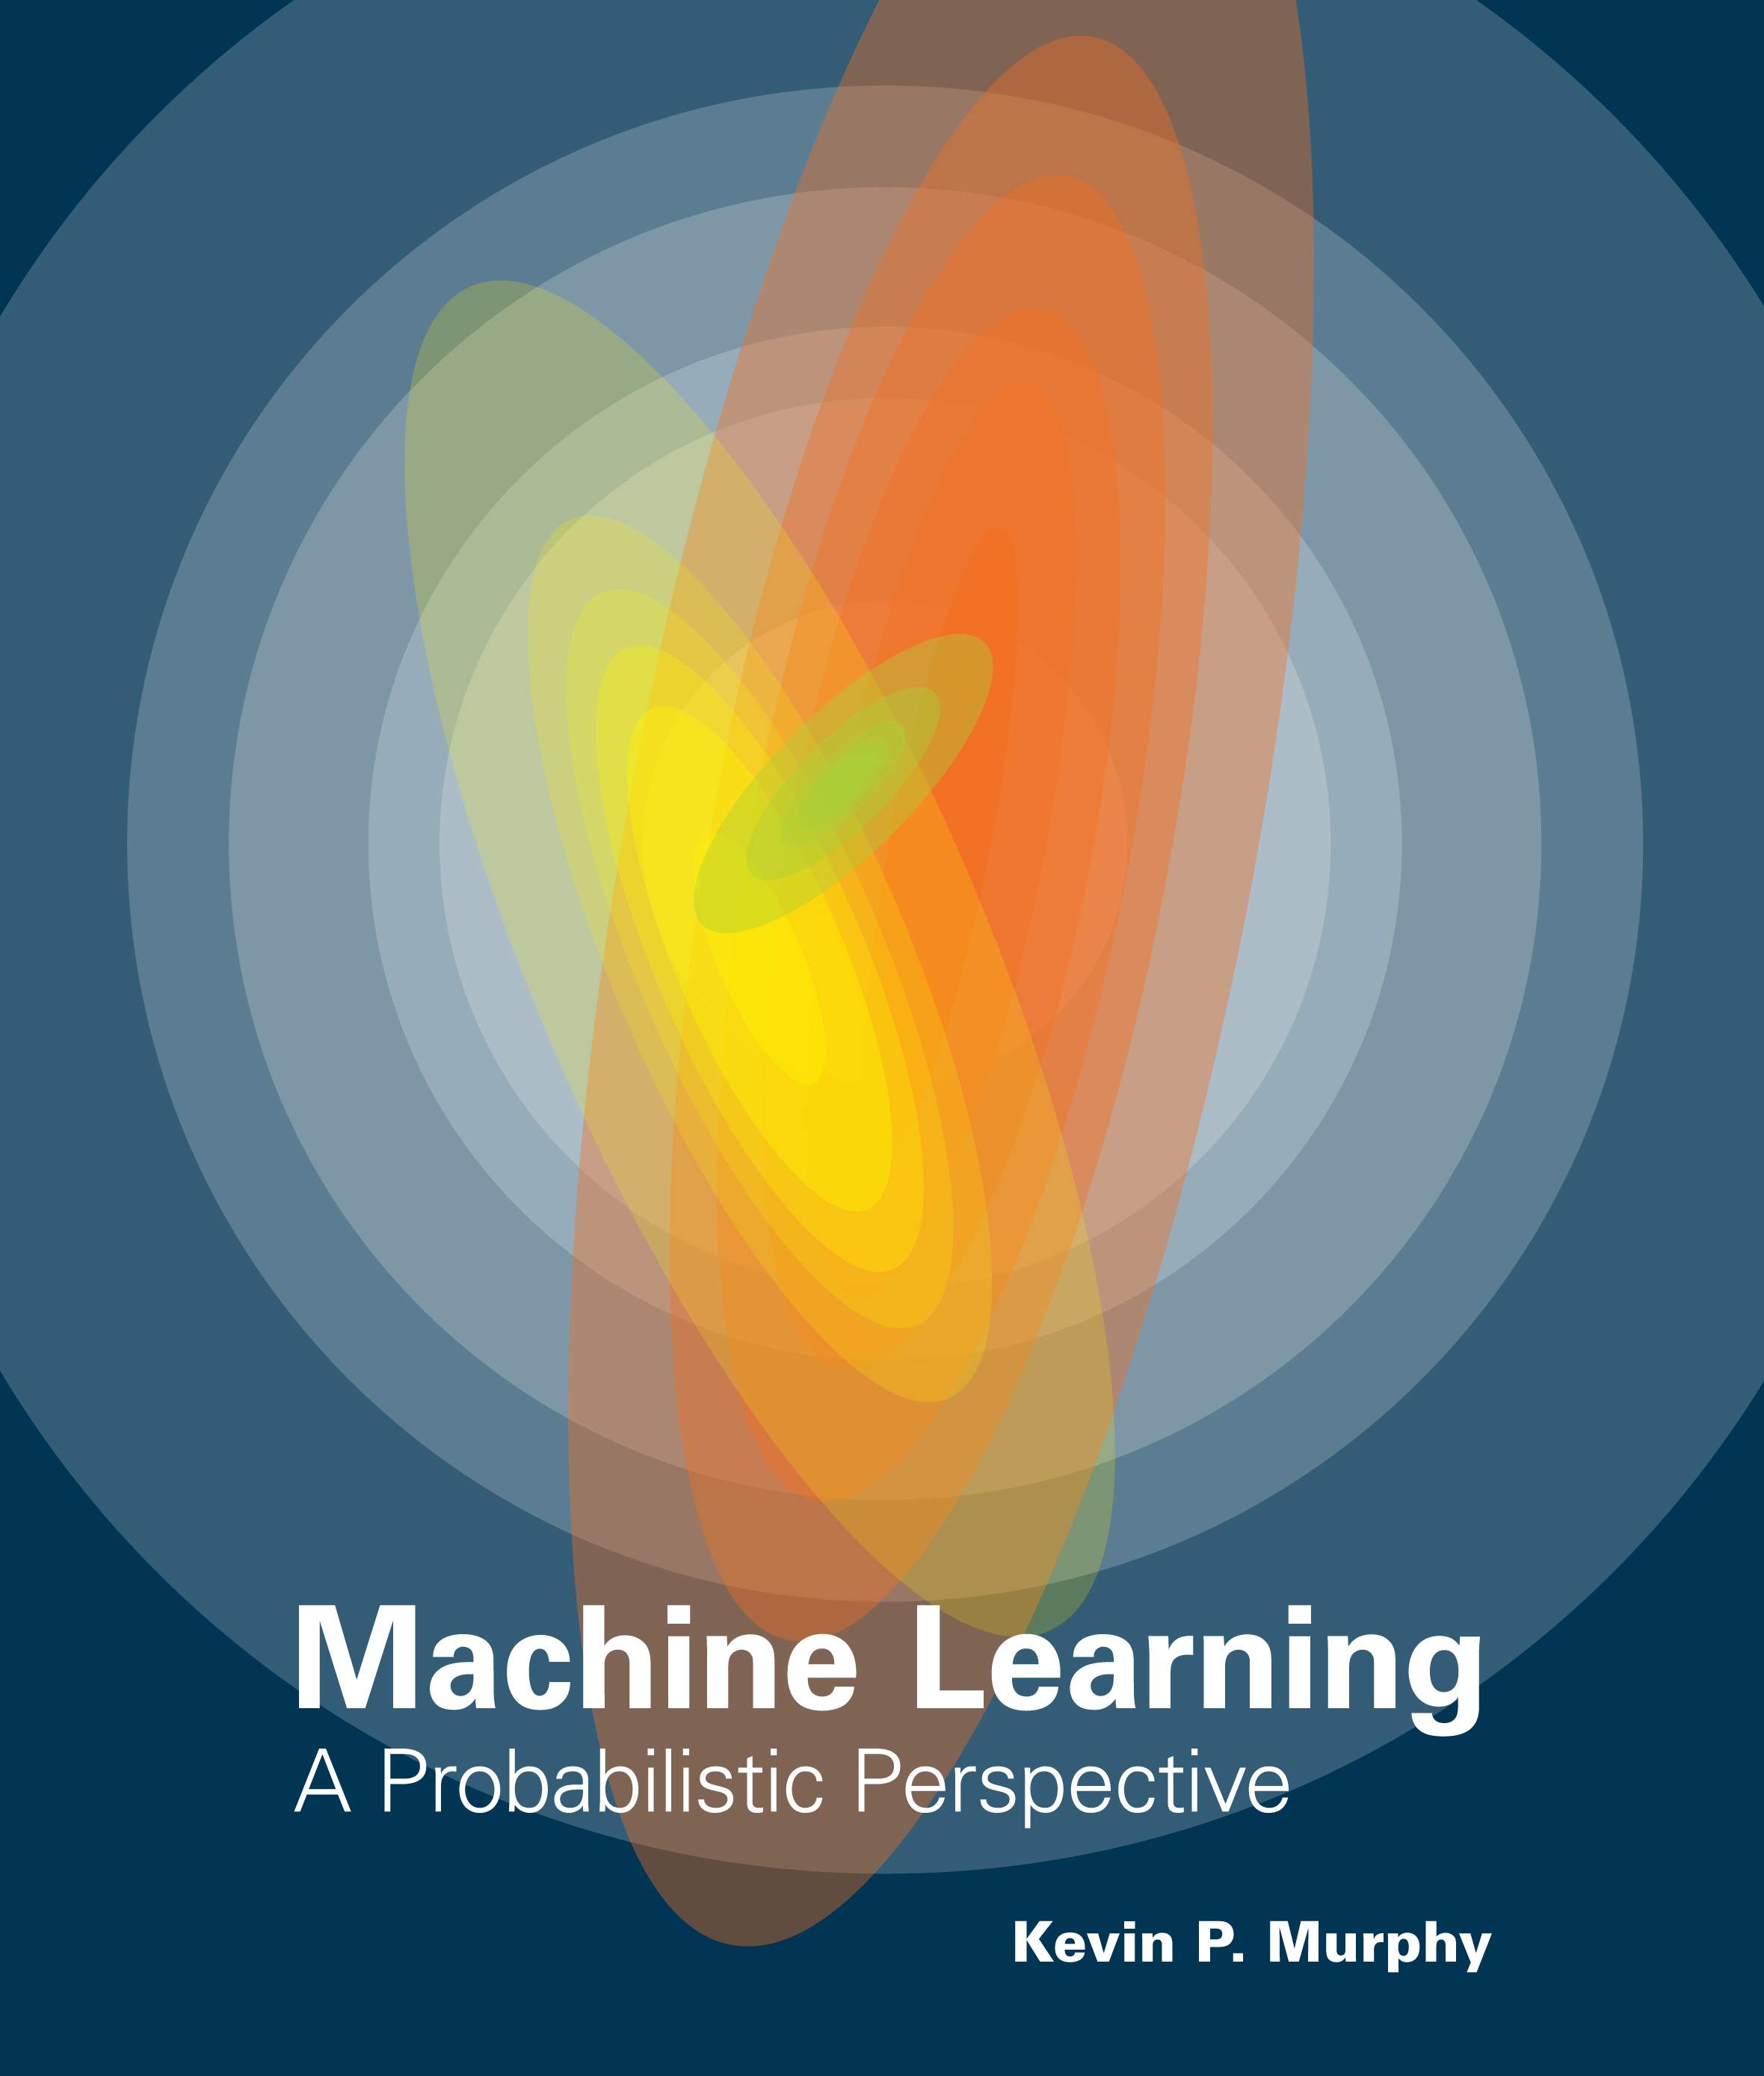 Machine Learning Textbook minireviews